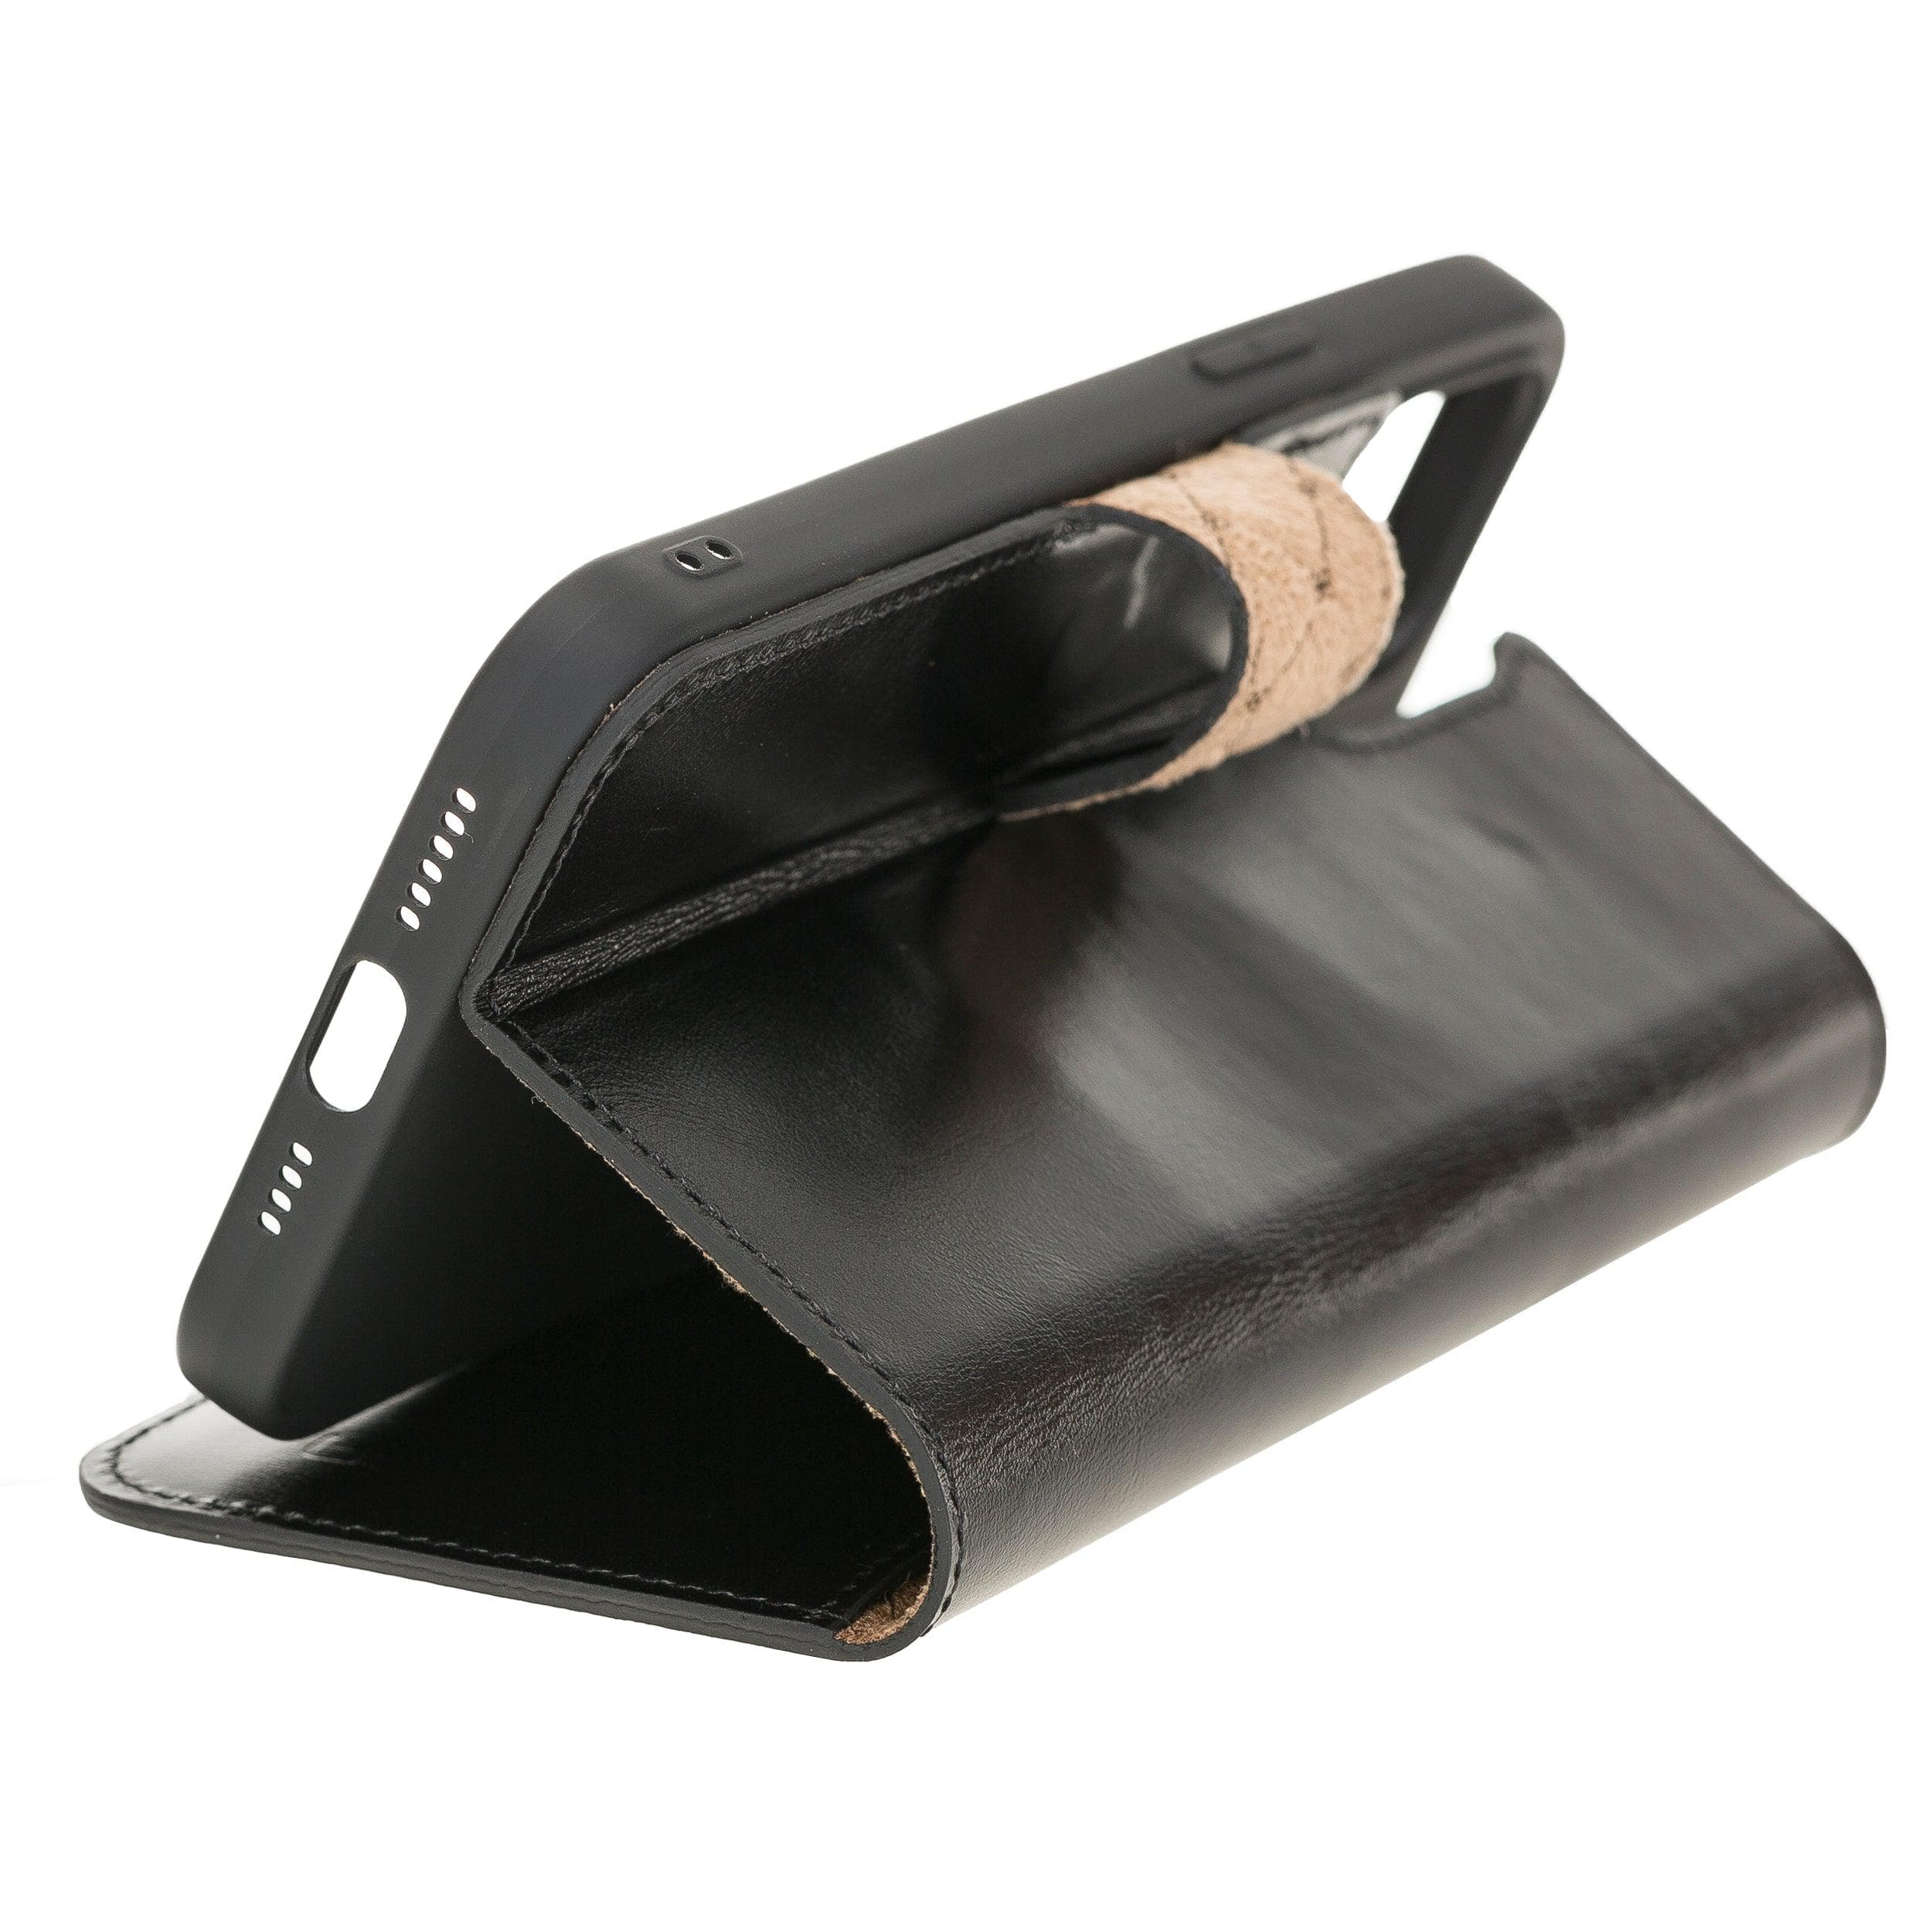 Non Detachable Leather Wallet Cases for Apple iPhone 12 Series Bouletta LTD